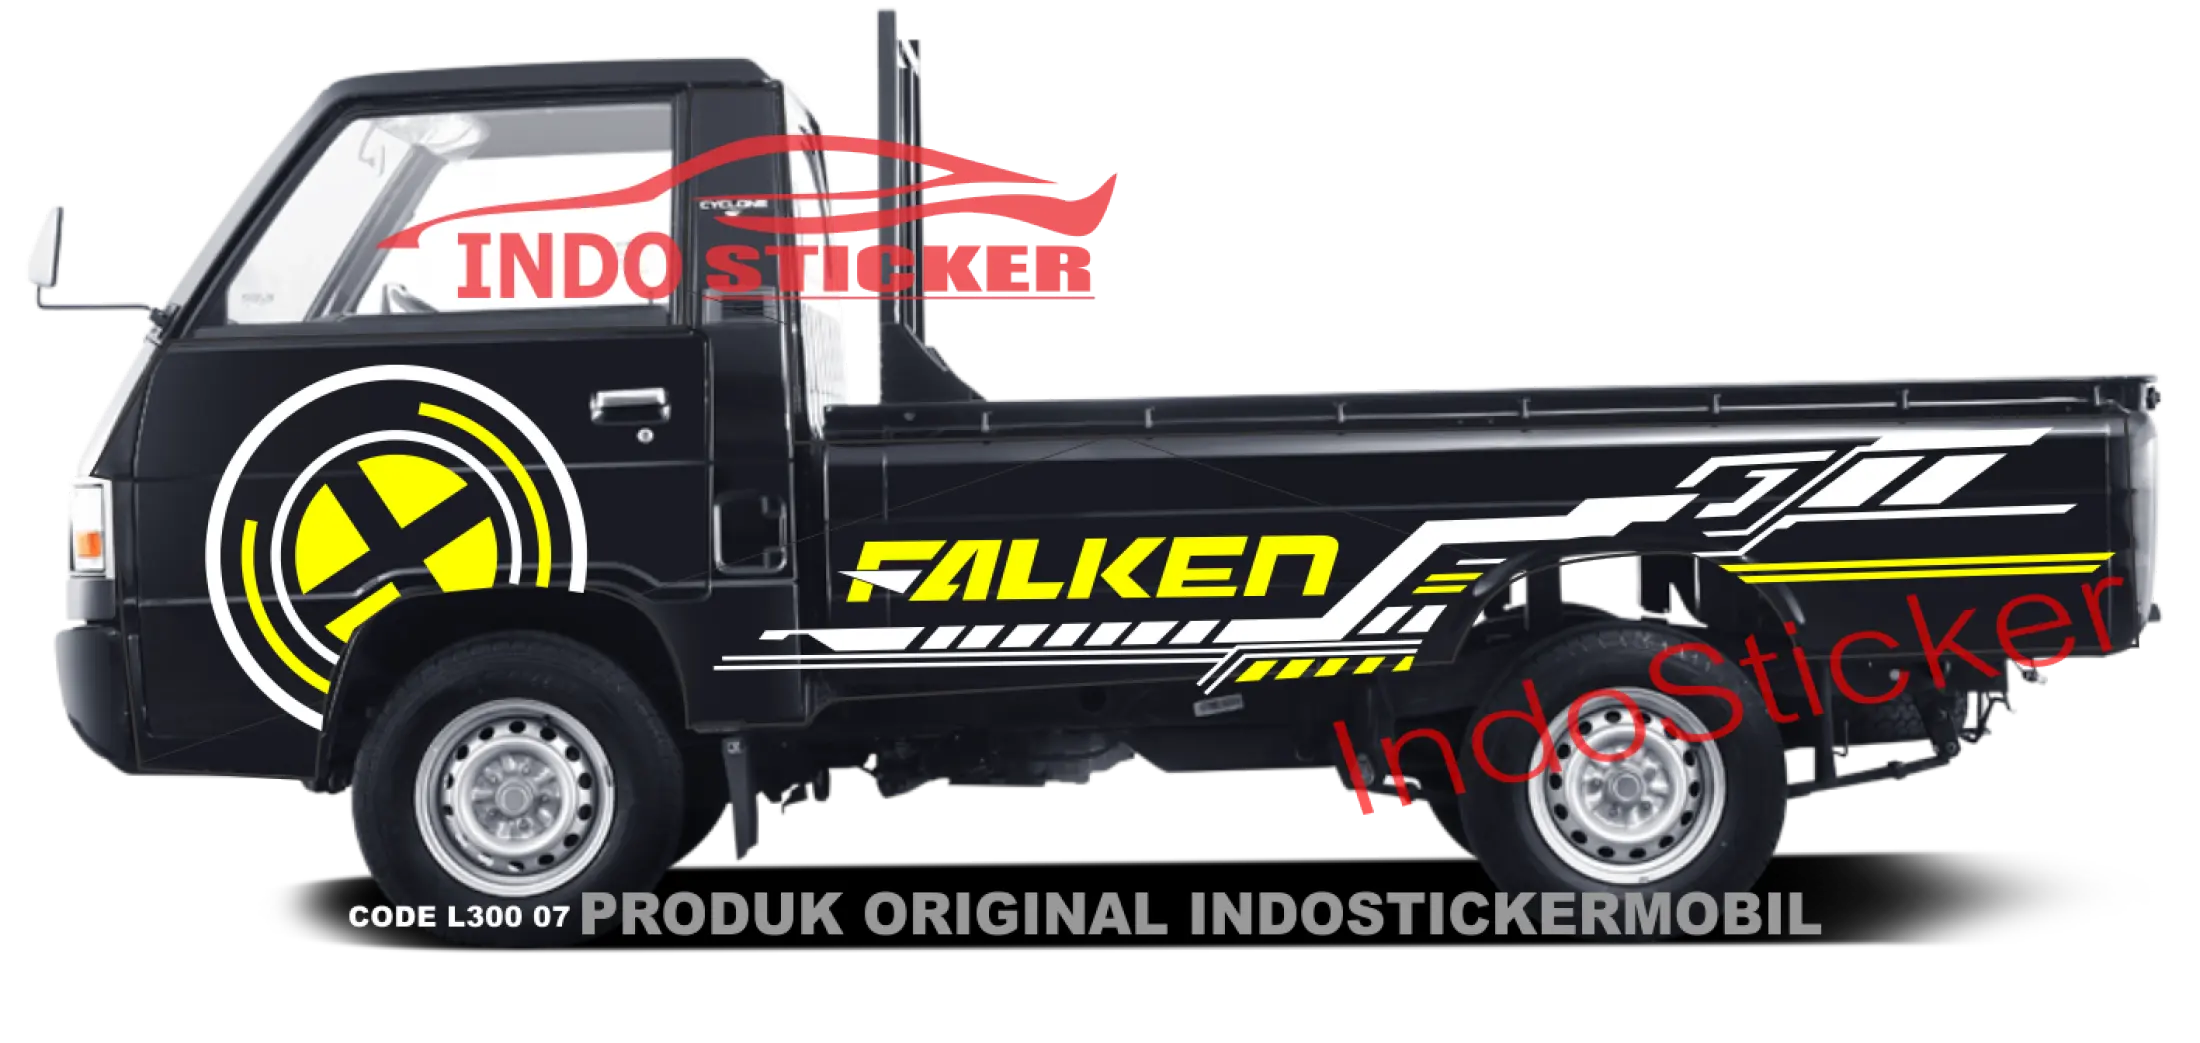 PROMO STIKER STICKER PICKUP L300 STIKER BODY MOBIL PICK UP L300 COLT CARRY FUTURA Lazada Indonesia